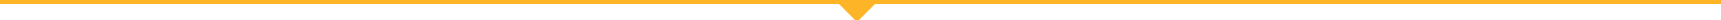 Yellow Divider